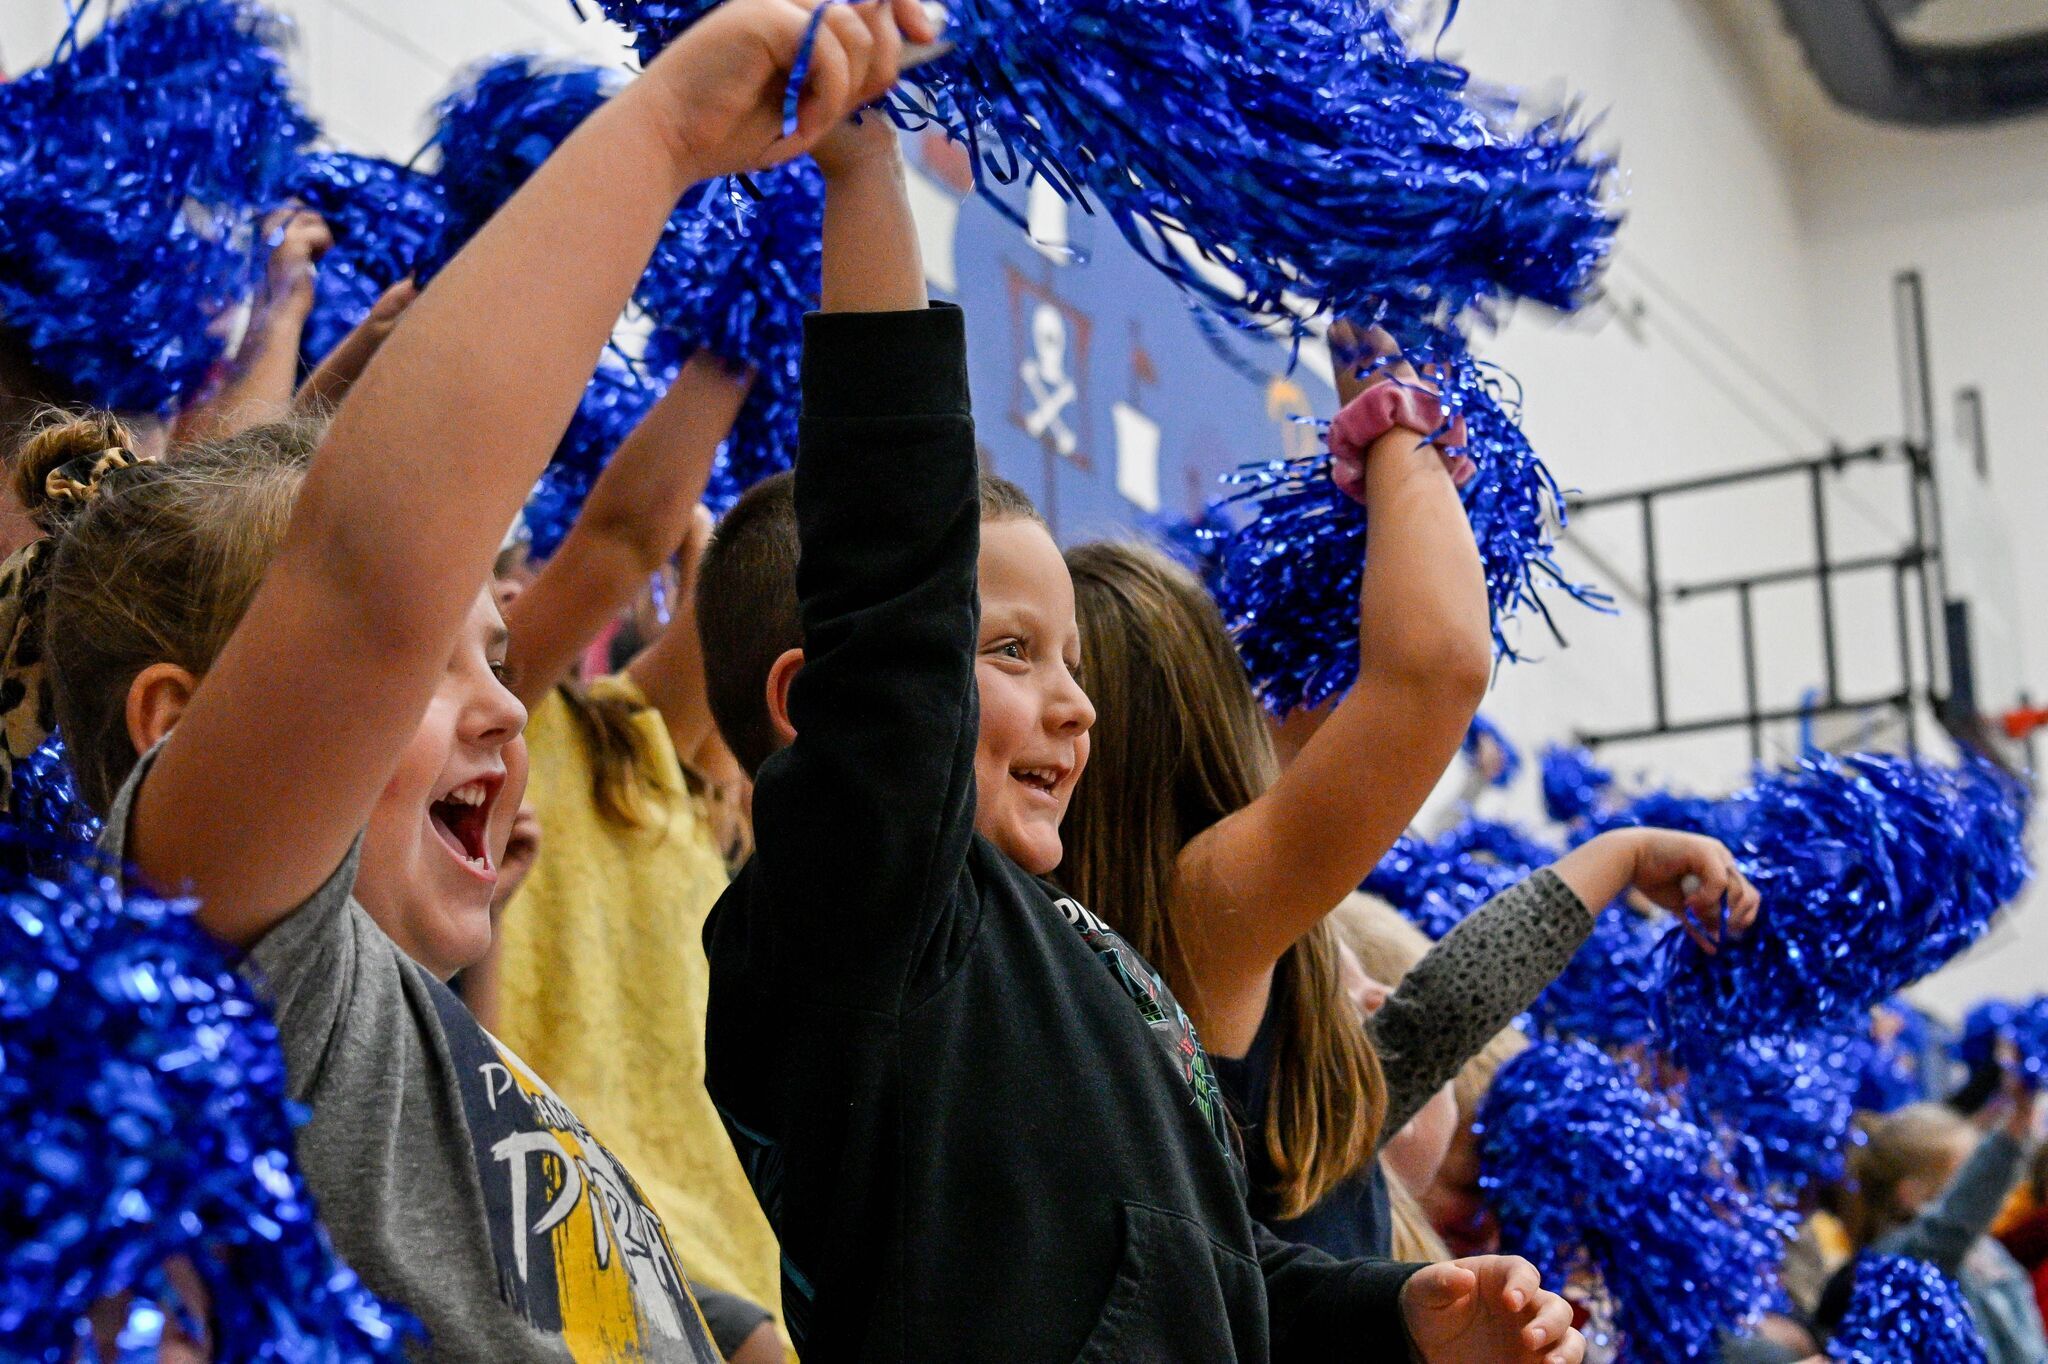 Elementary students cheering